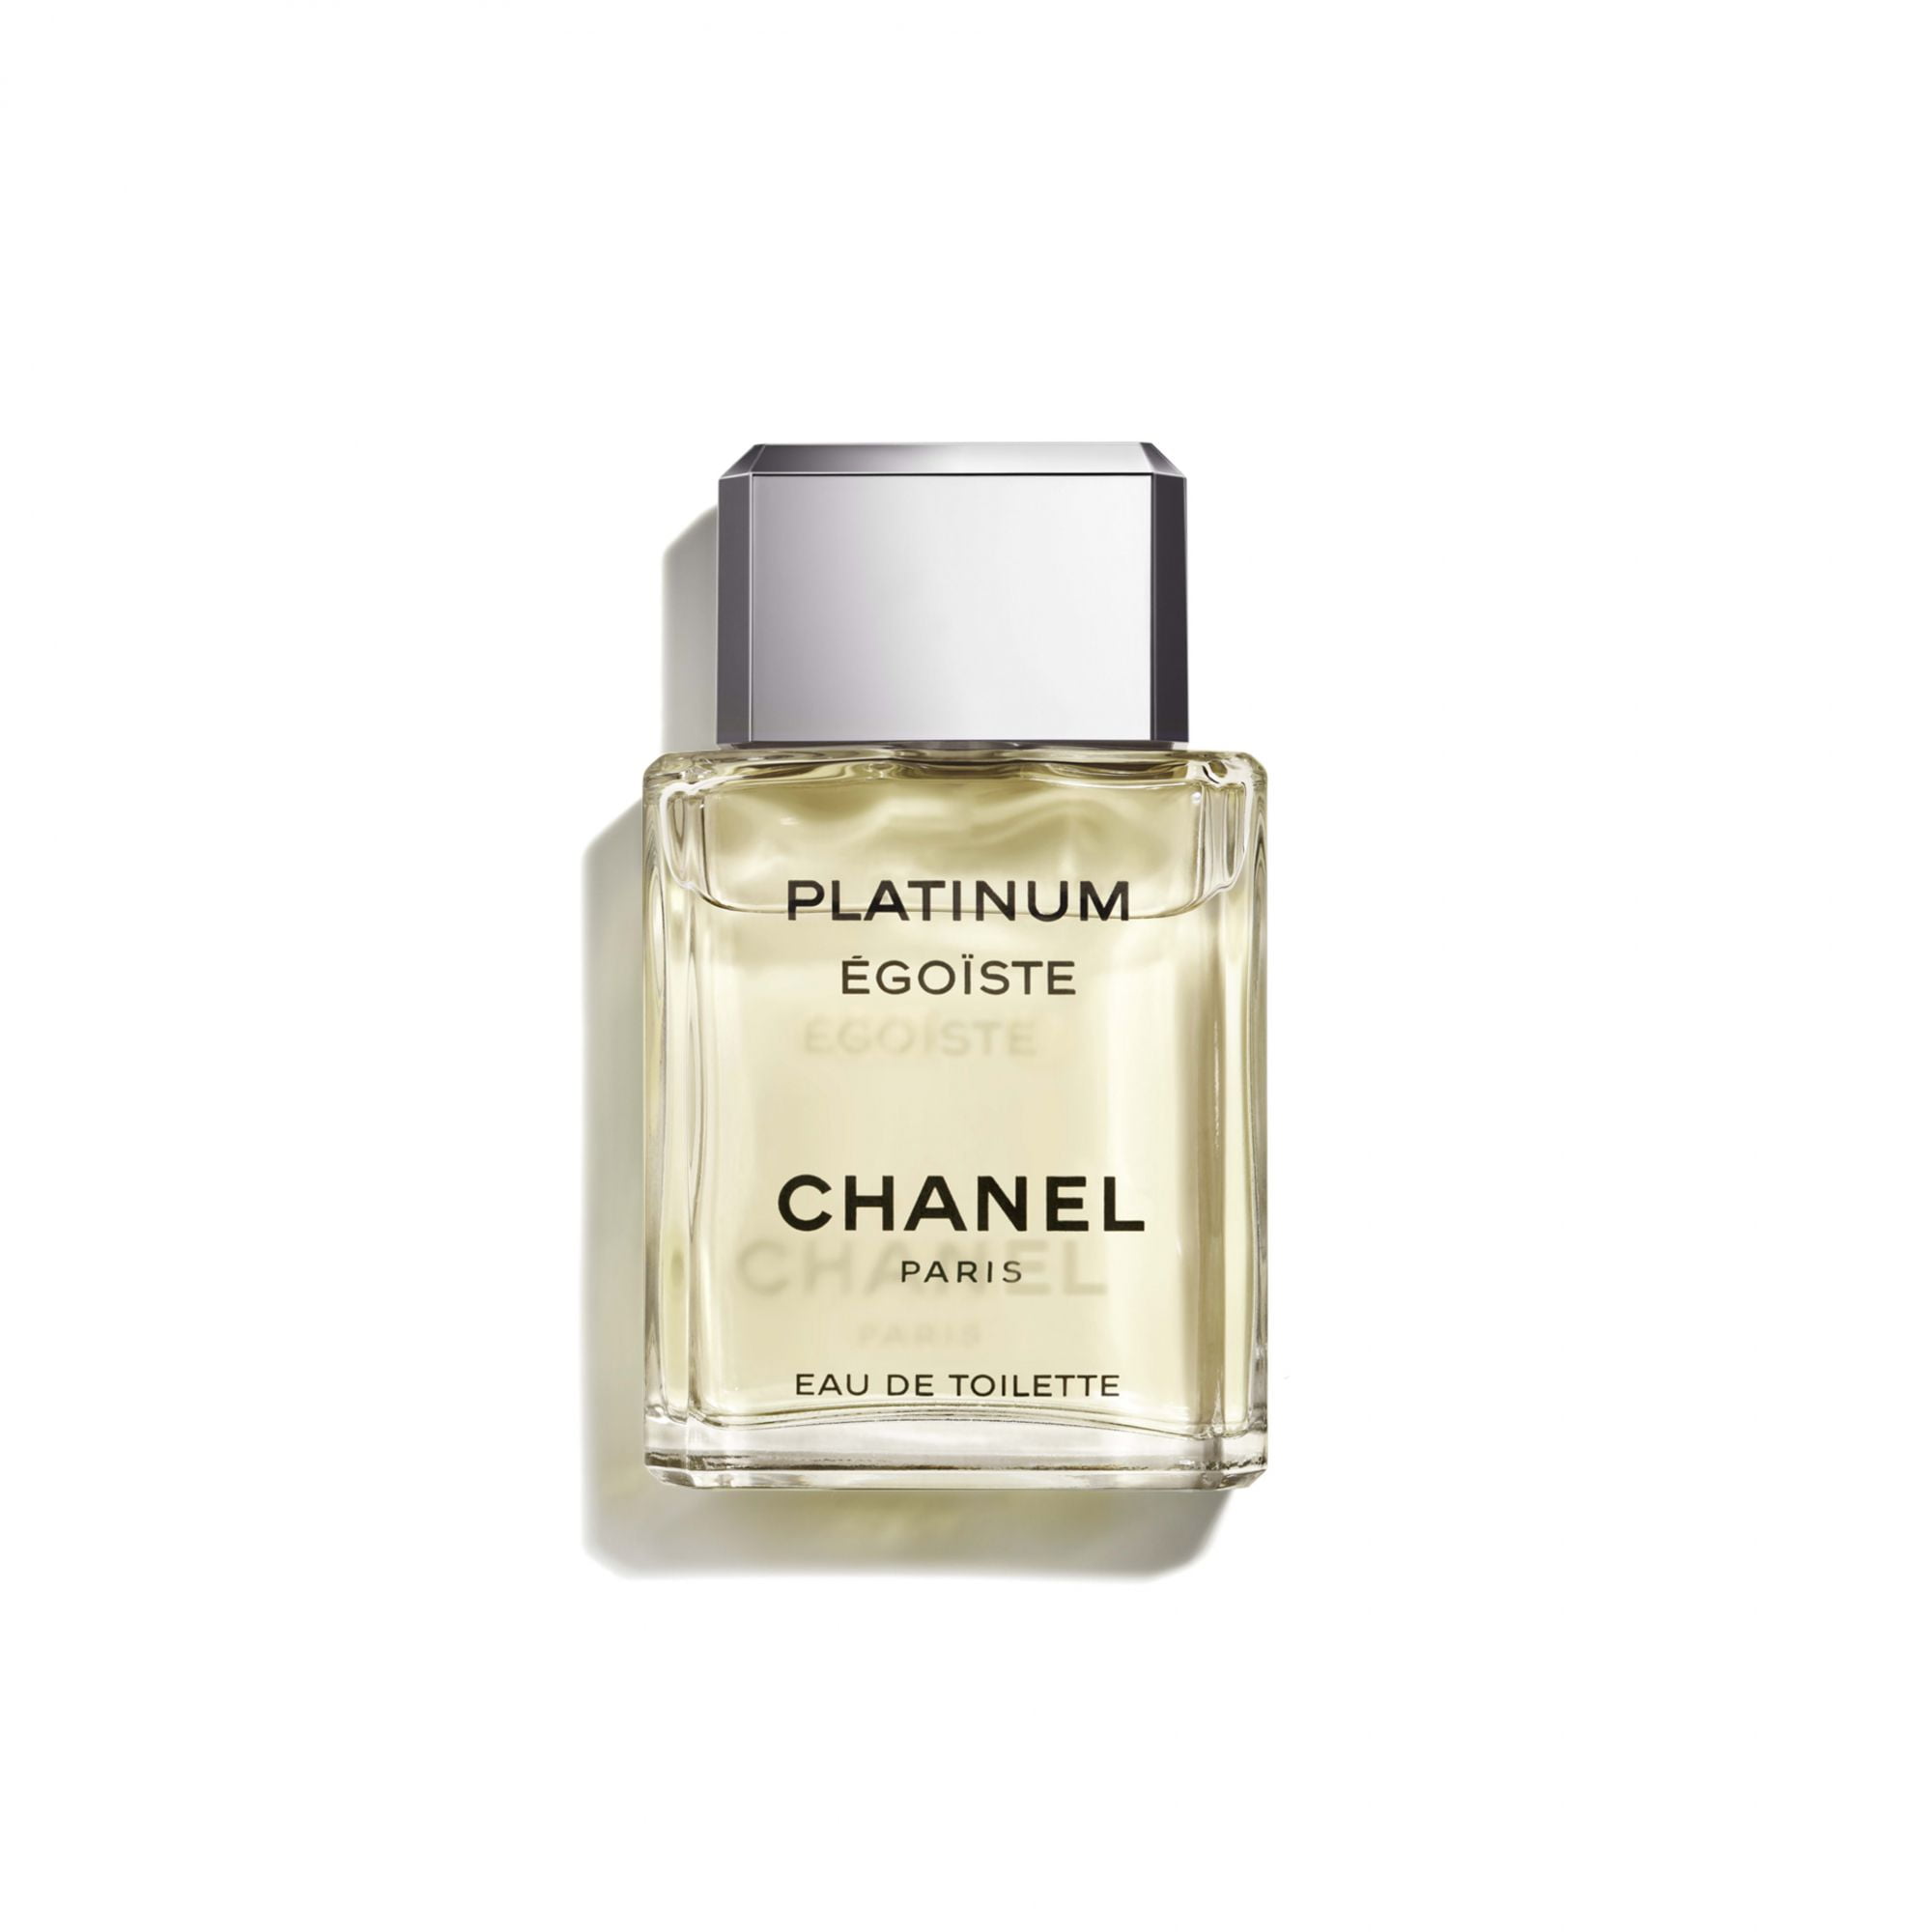 Chanel Platinum Egoiste. My favorite men's fragrance.  Perfume chanel,  Perfumes para homens, Melhores perfumes masculinos